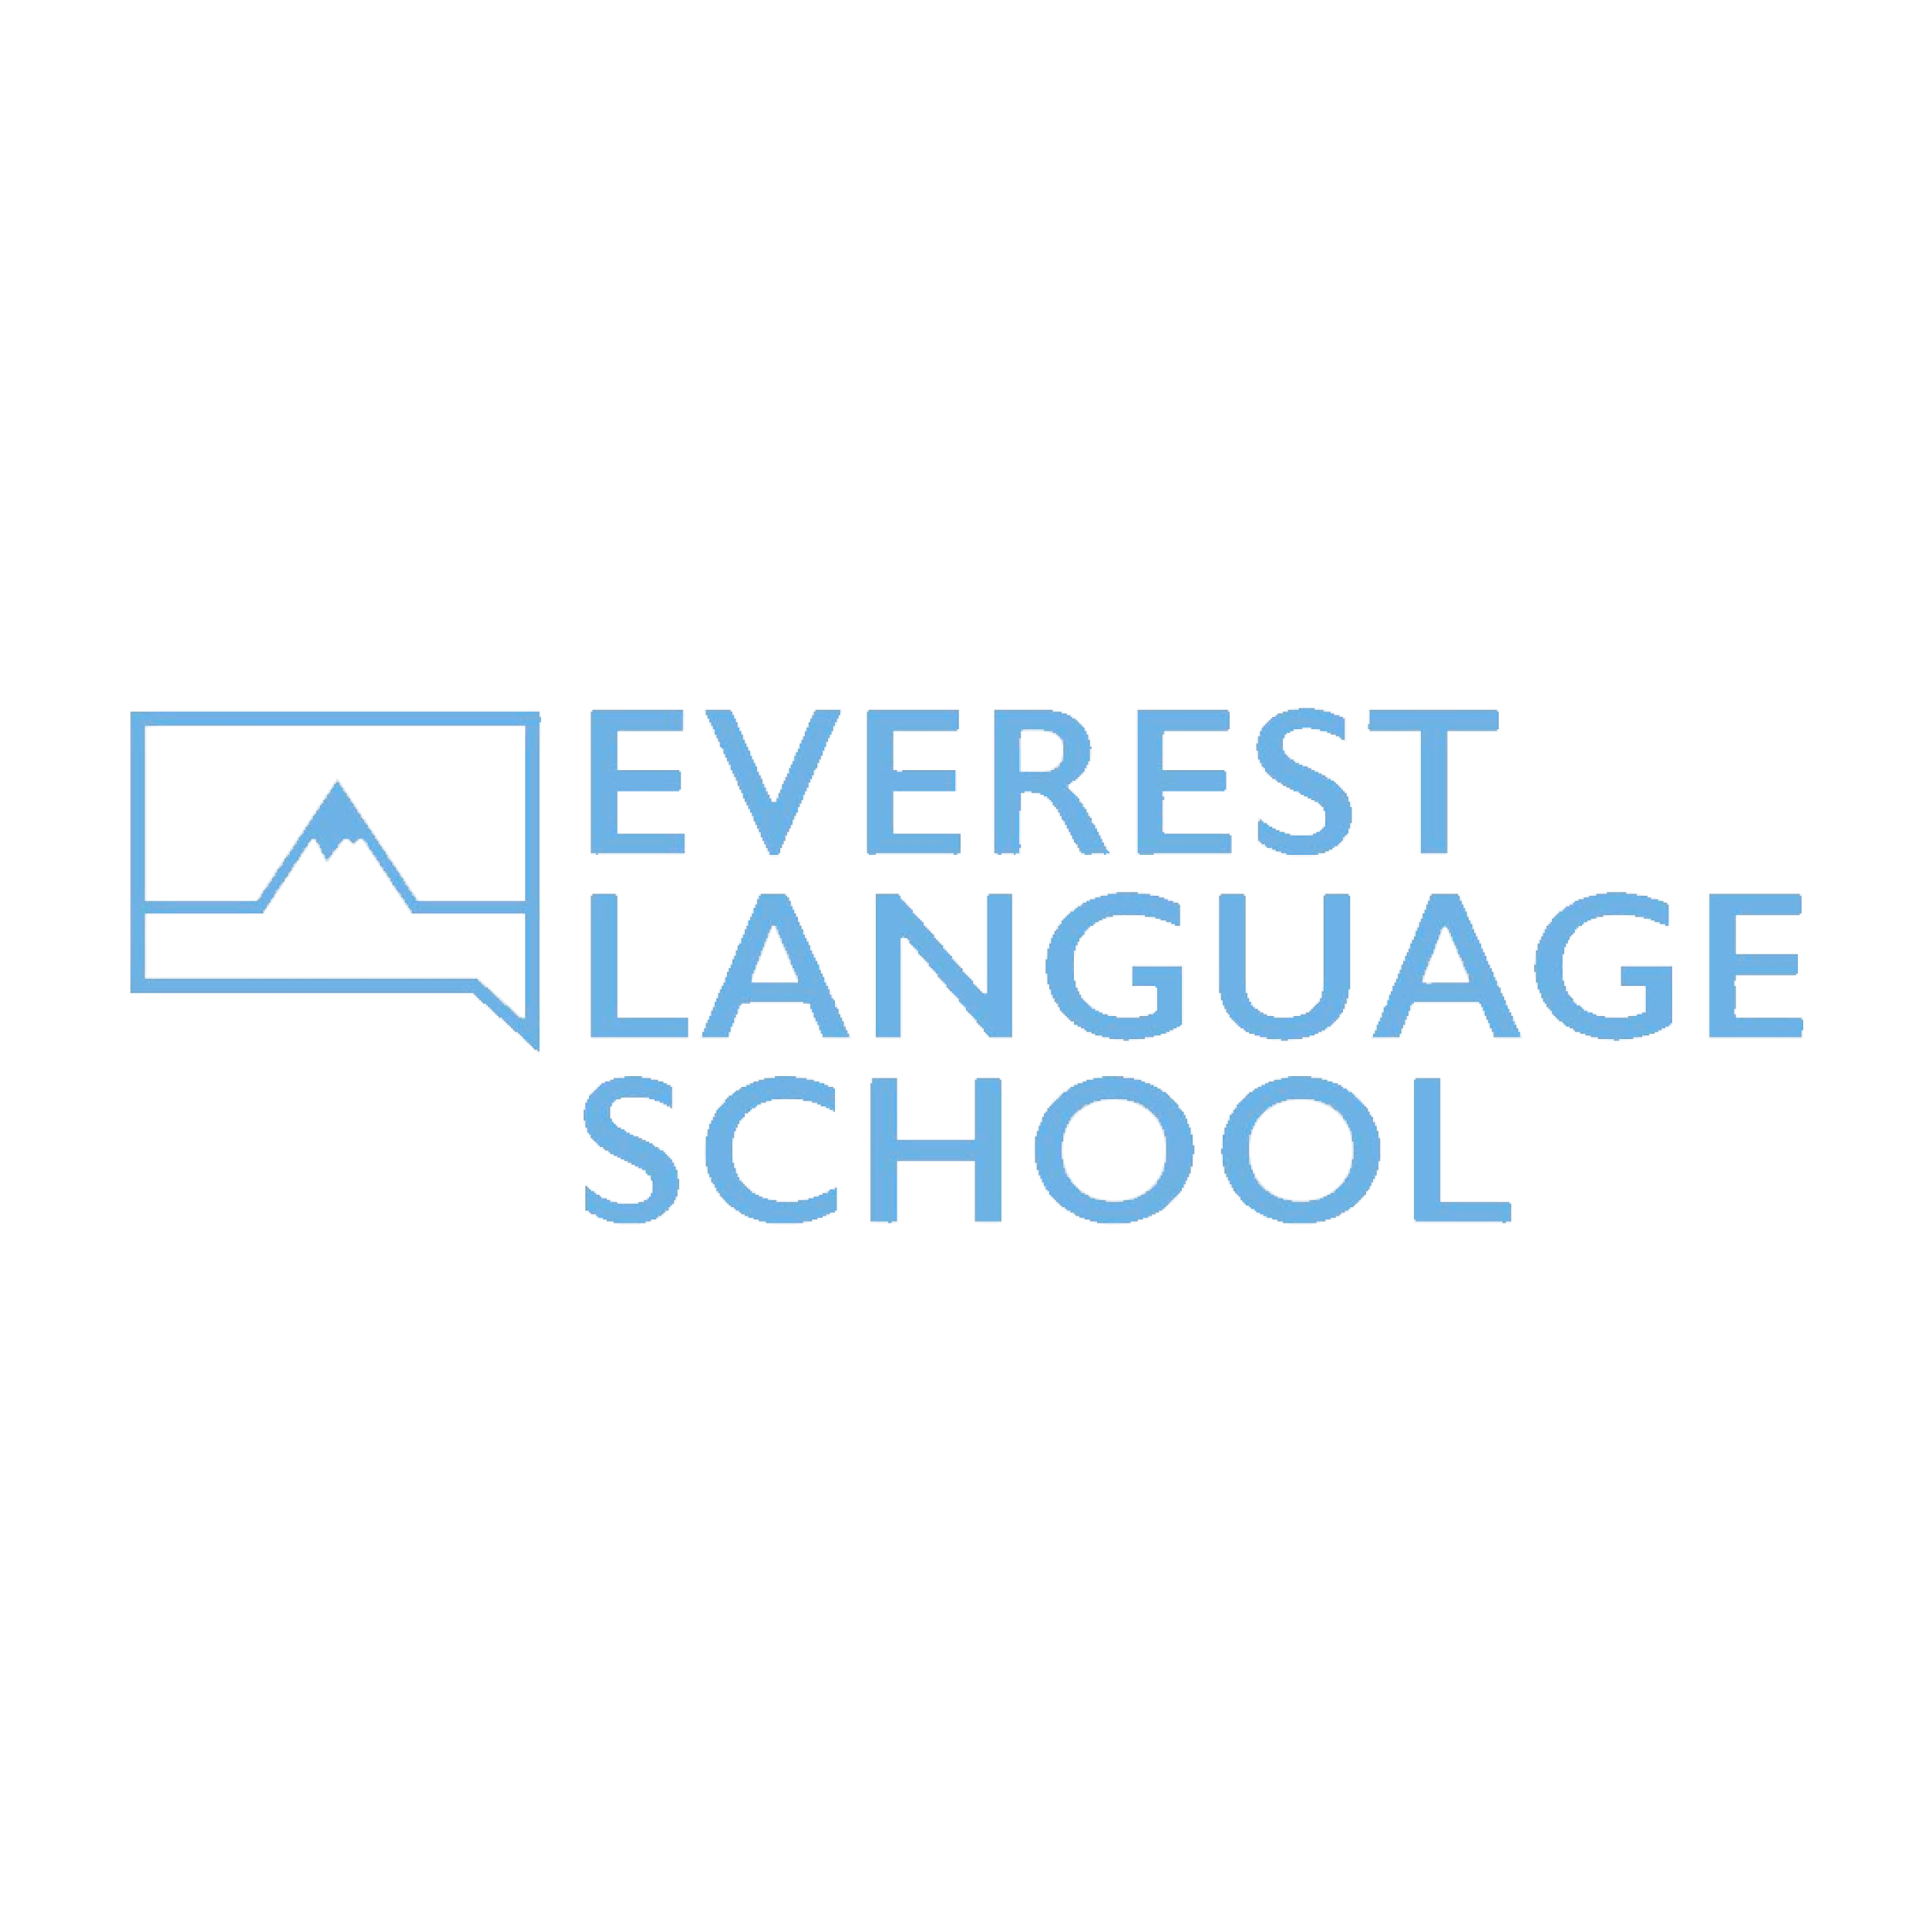 EVEREST LANGUAGE SCHOOL